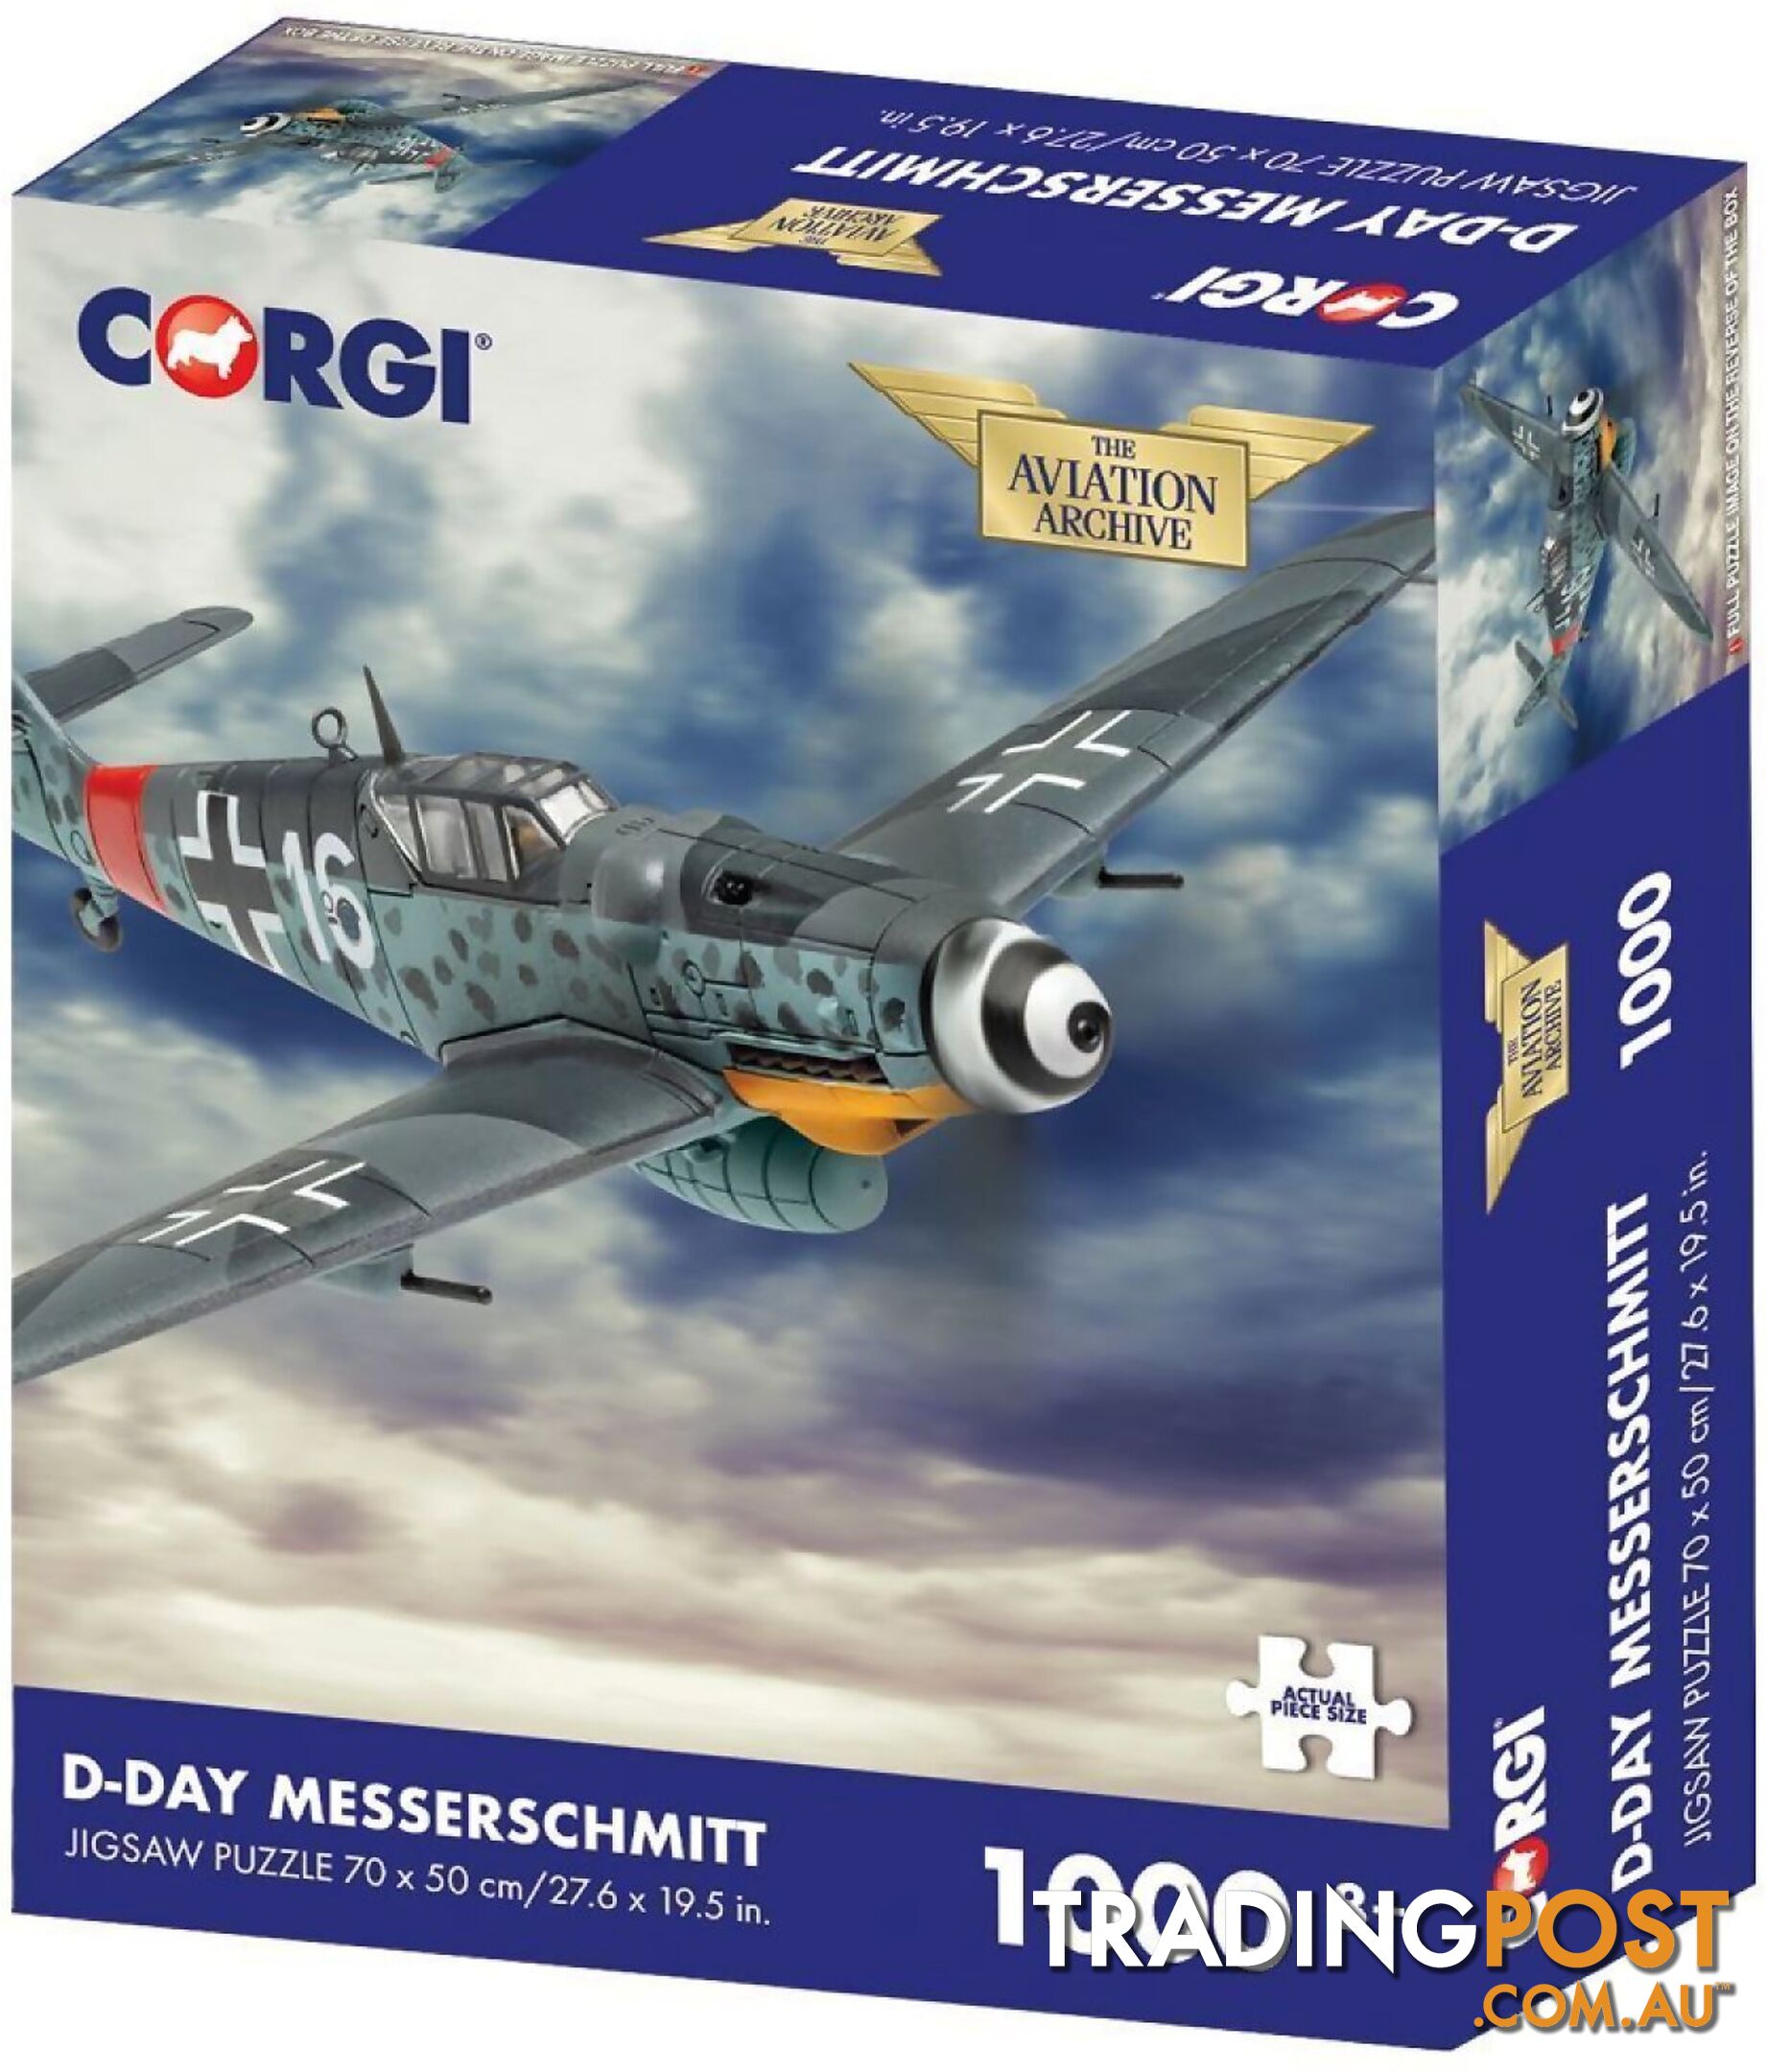 Holdson - Corgi Collection - D-day Messerschmitt - Jigsaw Puzzle 1000 Pieces - Jdhol331531 - 5060337331531